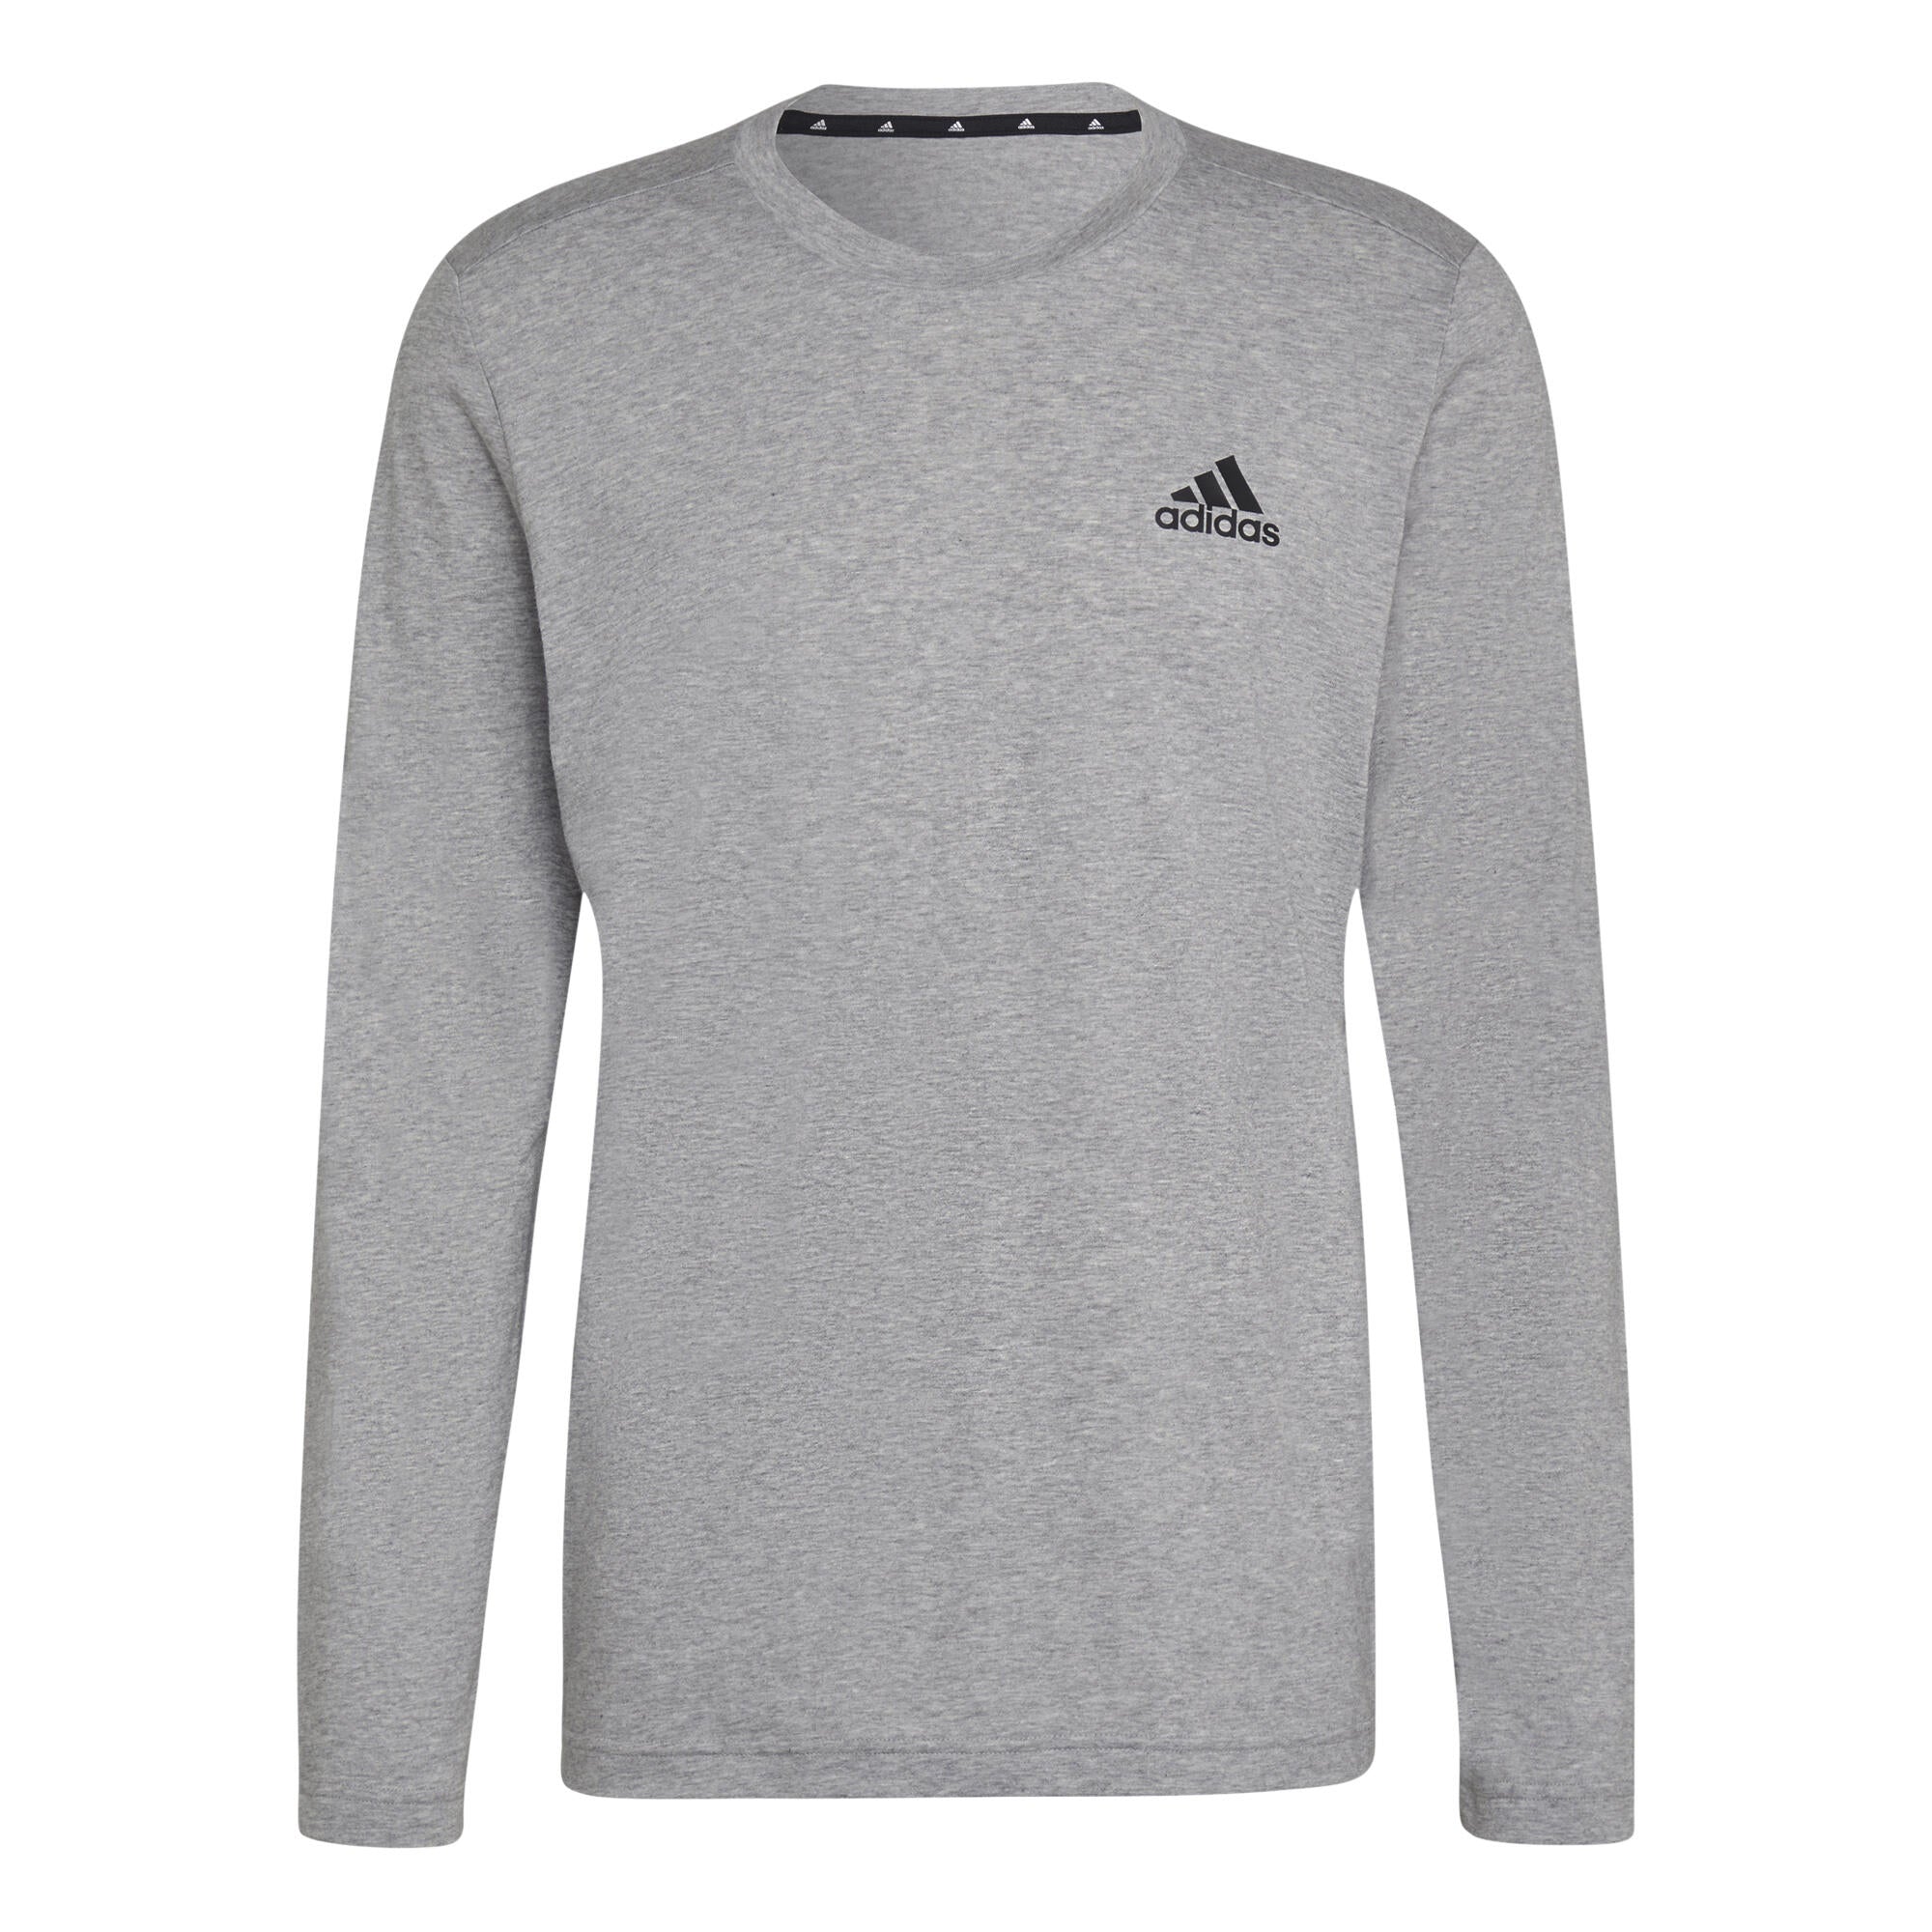 Adidas FR Long Sleeve Men's T-Shirt